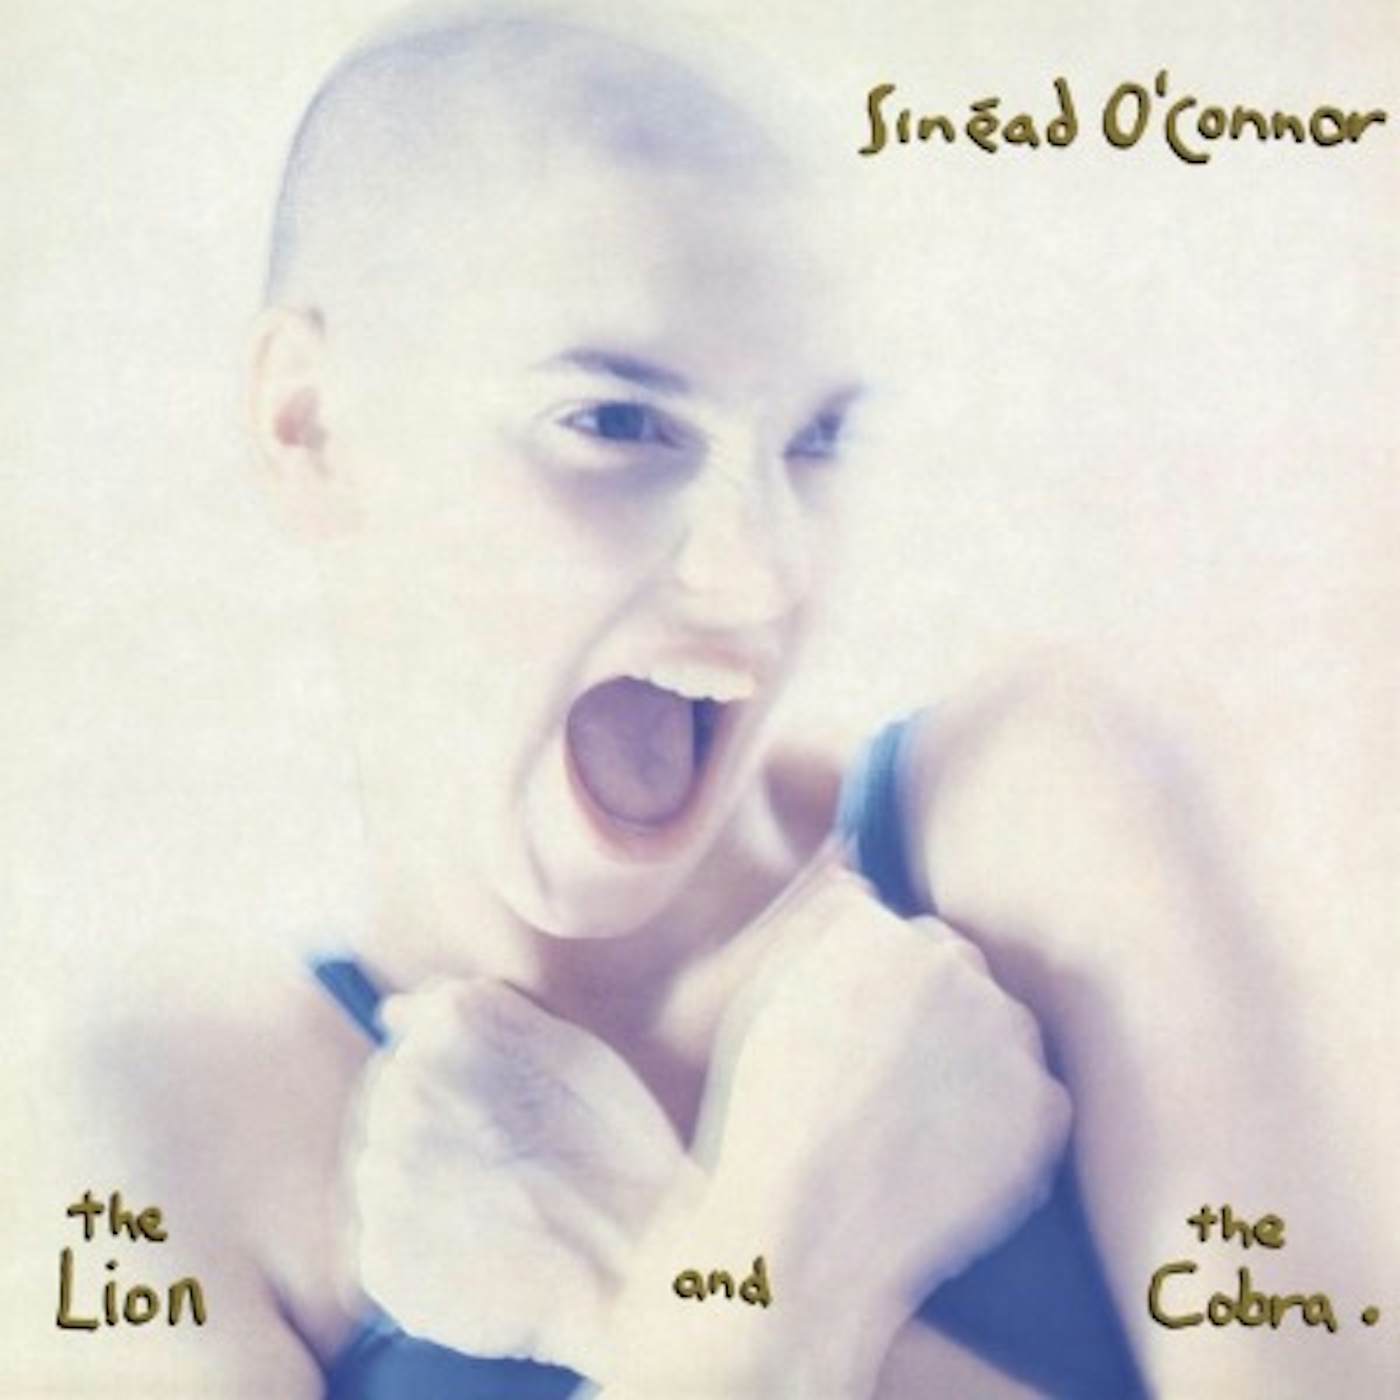 Sinéad O'Connor LION & THE COBRA (180G) Vinyl Record